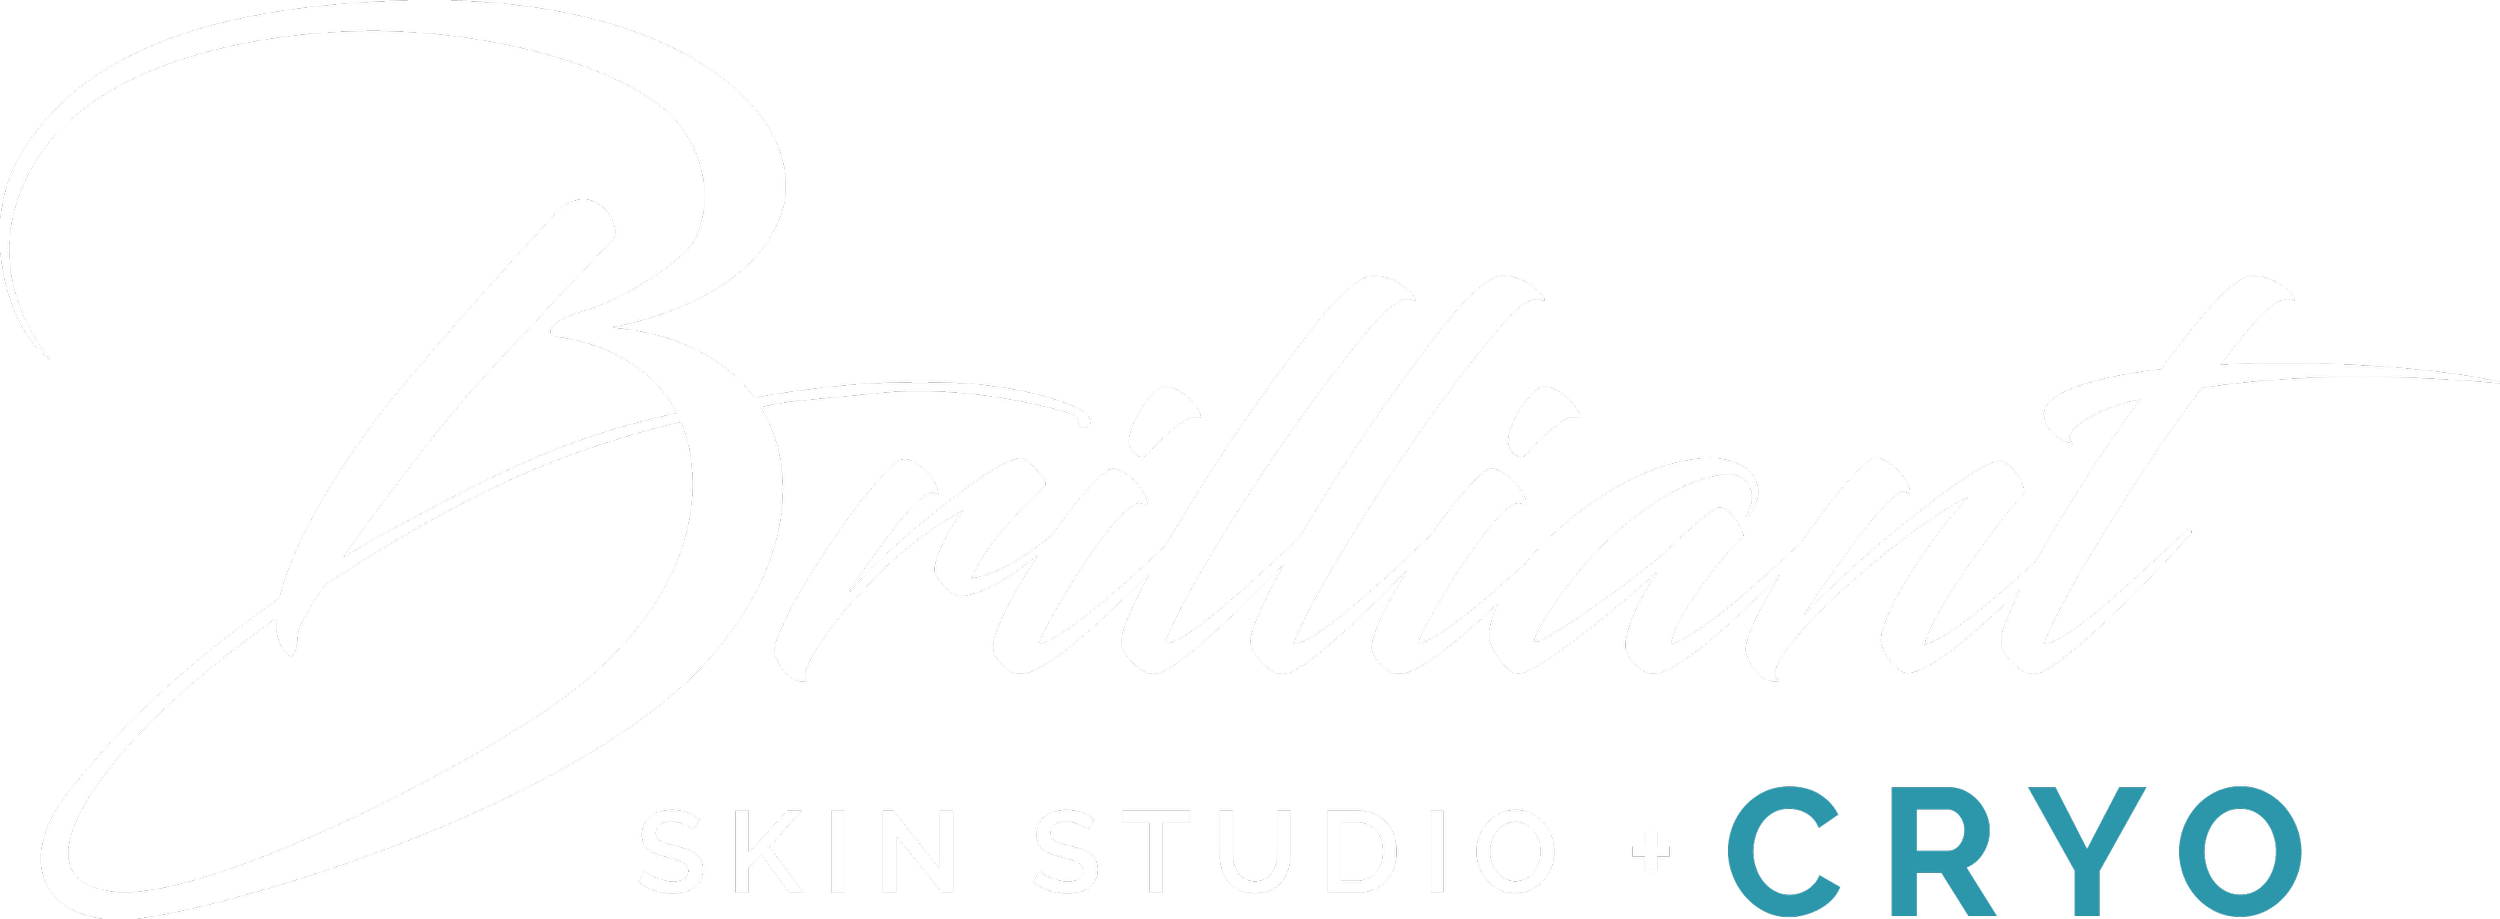 Brilliant Skin Studio